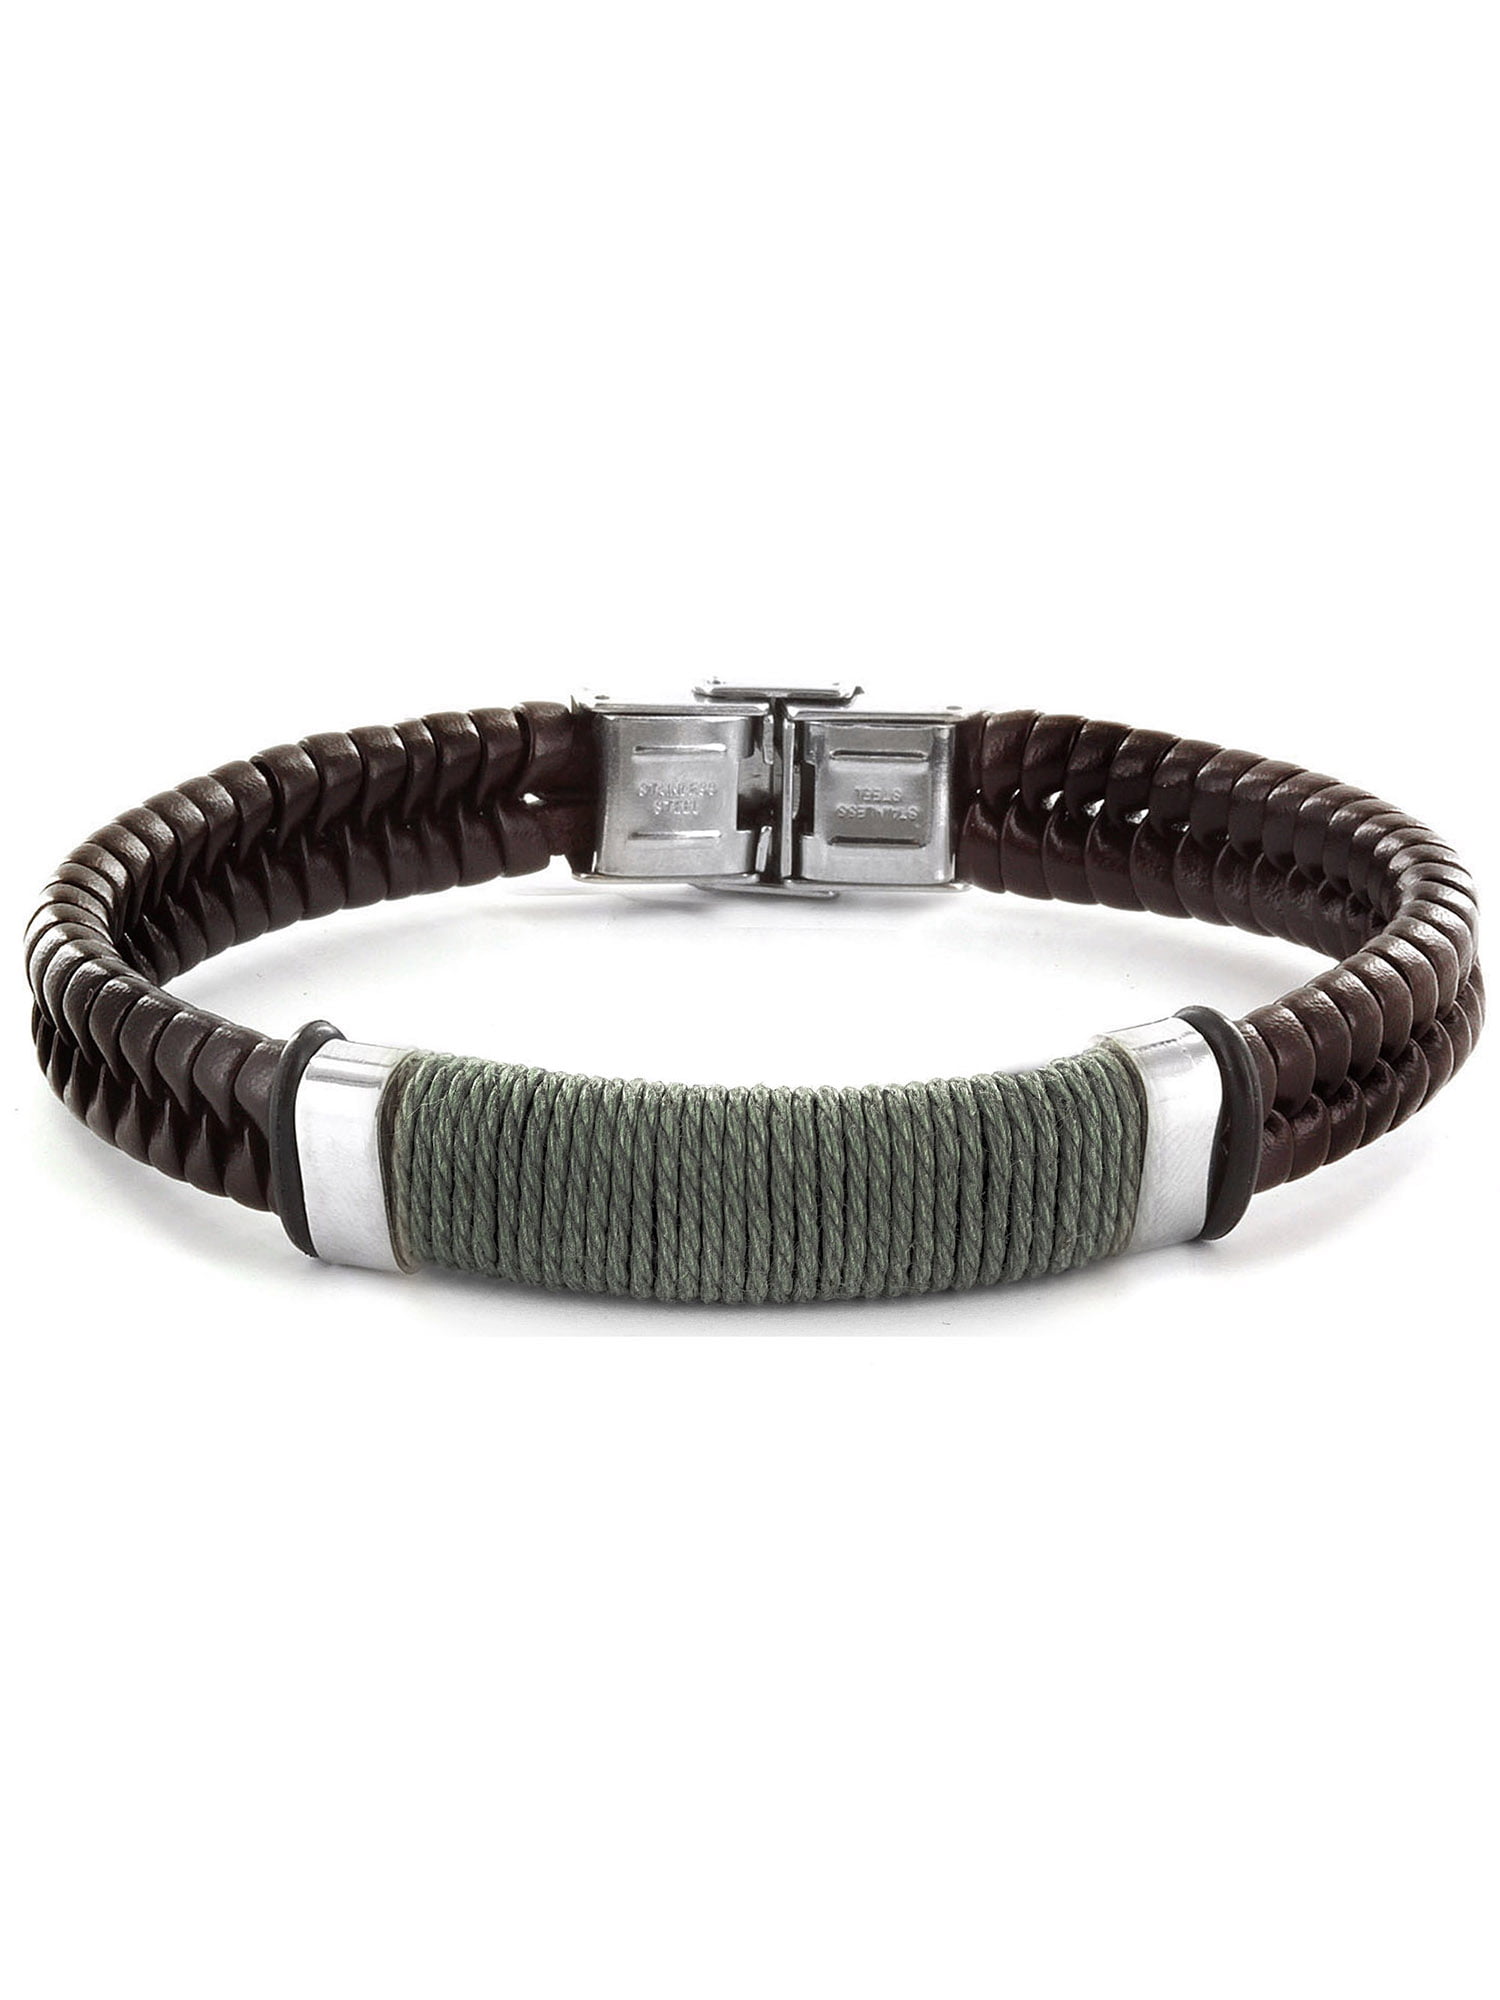 Steel Brown  Braided Leather Wrist Round Bracelet 7.5'' 